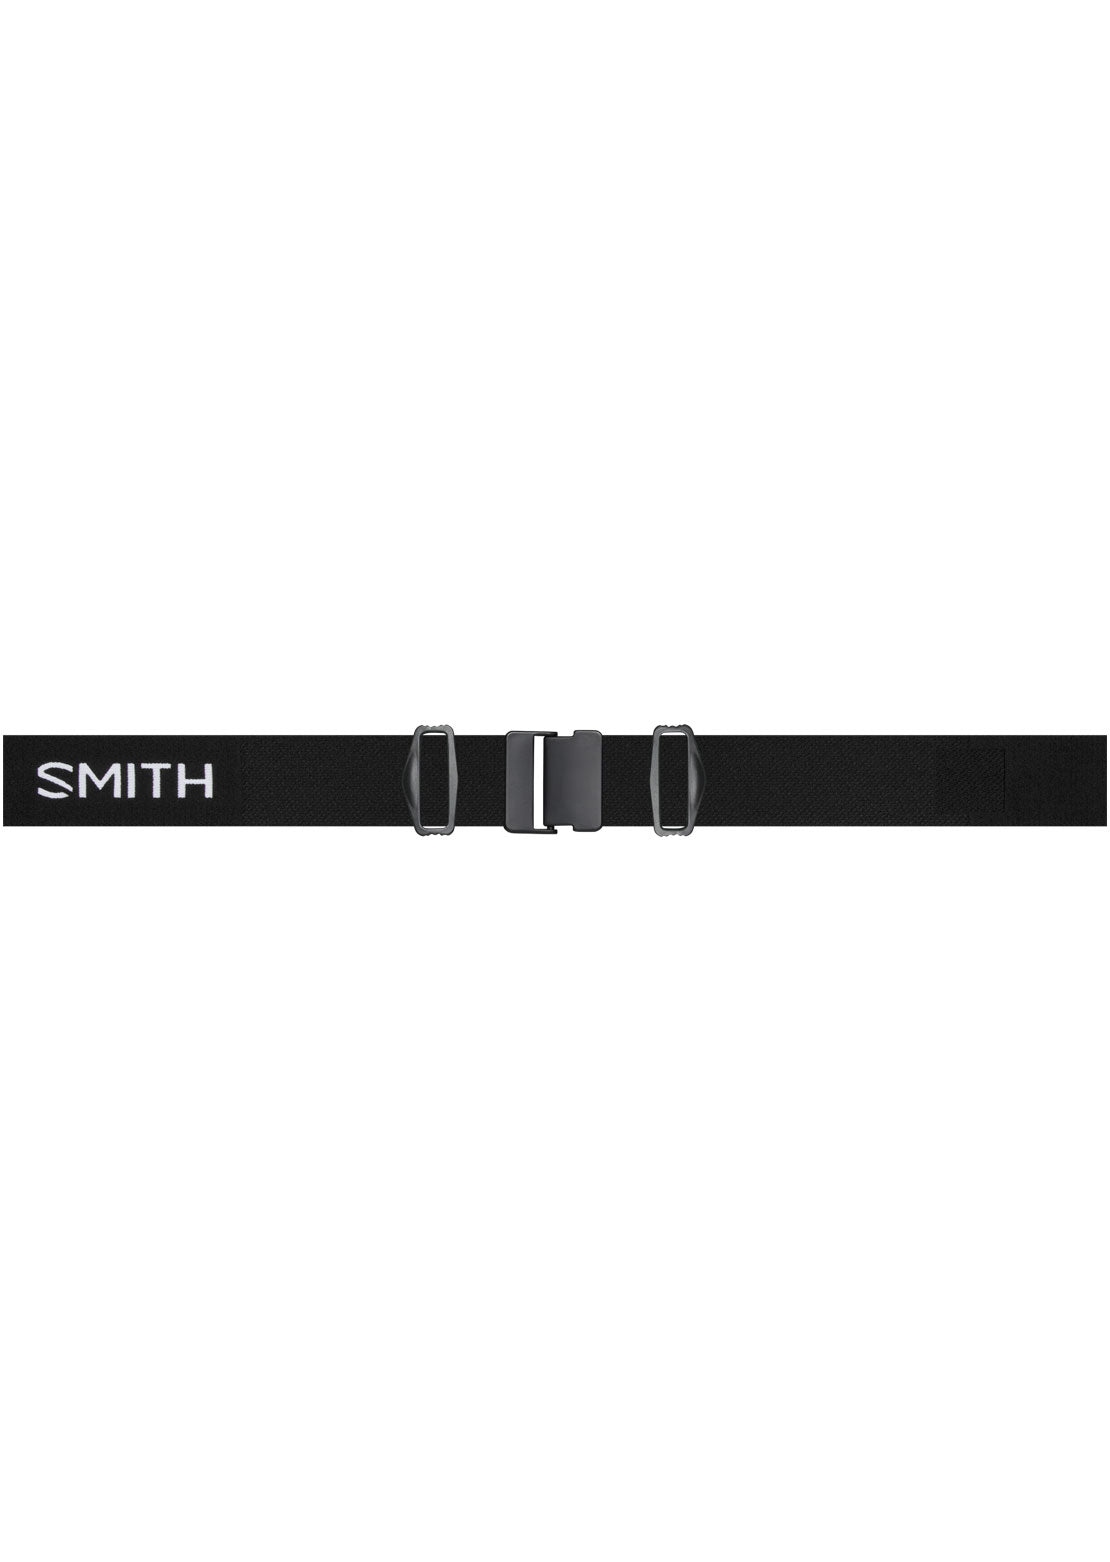 Smith Squad Mag Goggles Black/ChromaPop Sun Black Gold Mirror